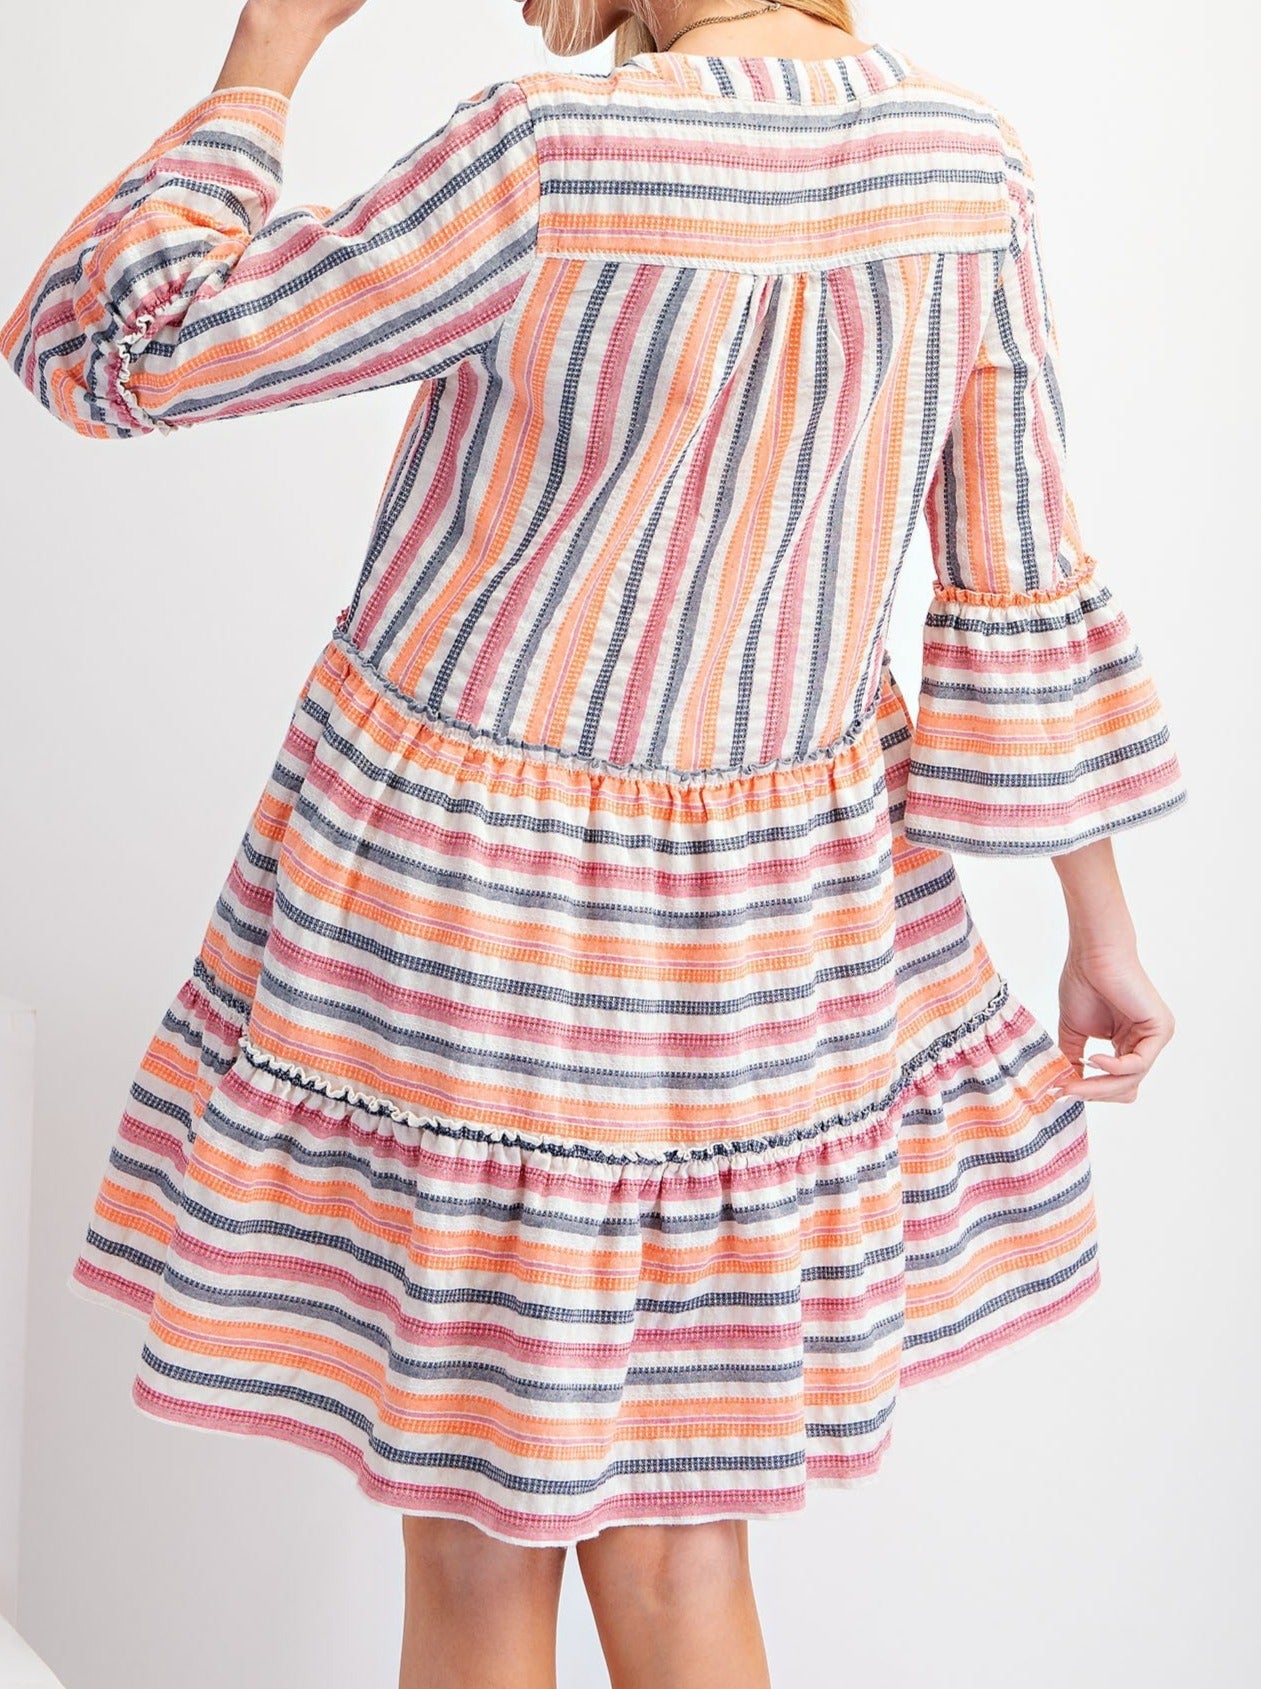 Orange and Navy Print Dress - Brazos Avenue Market 